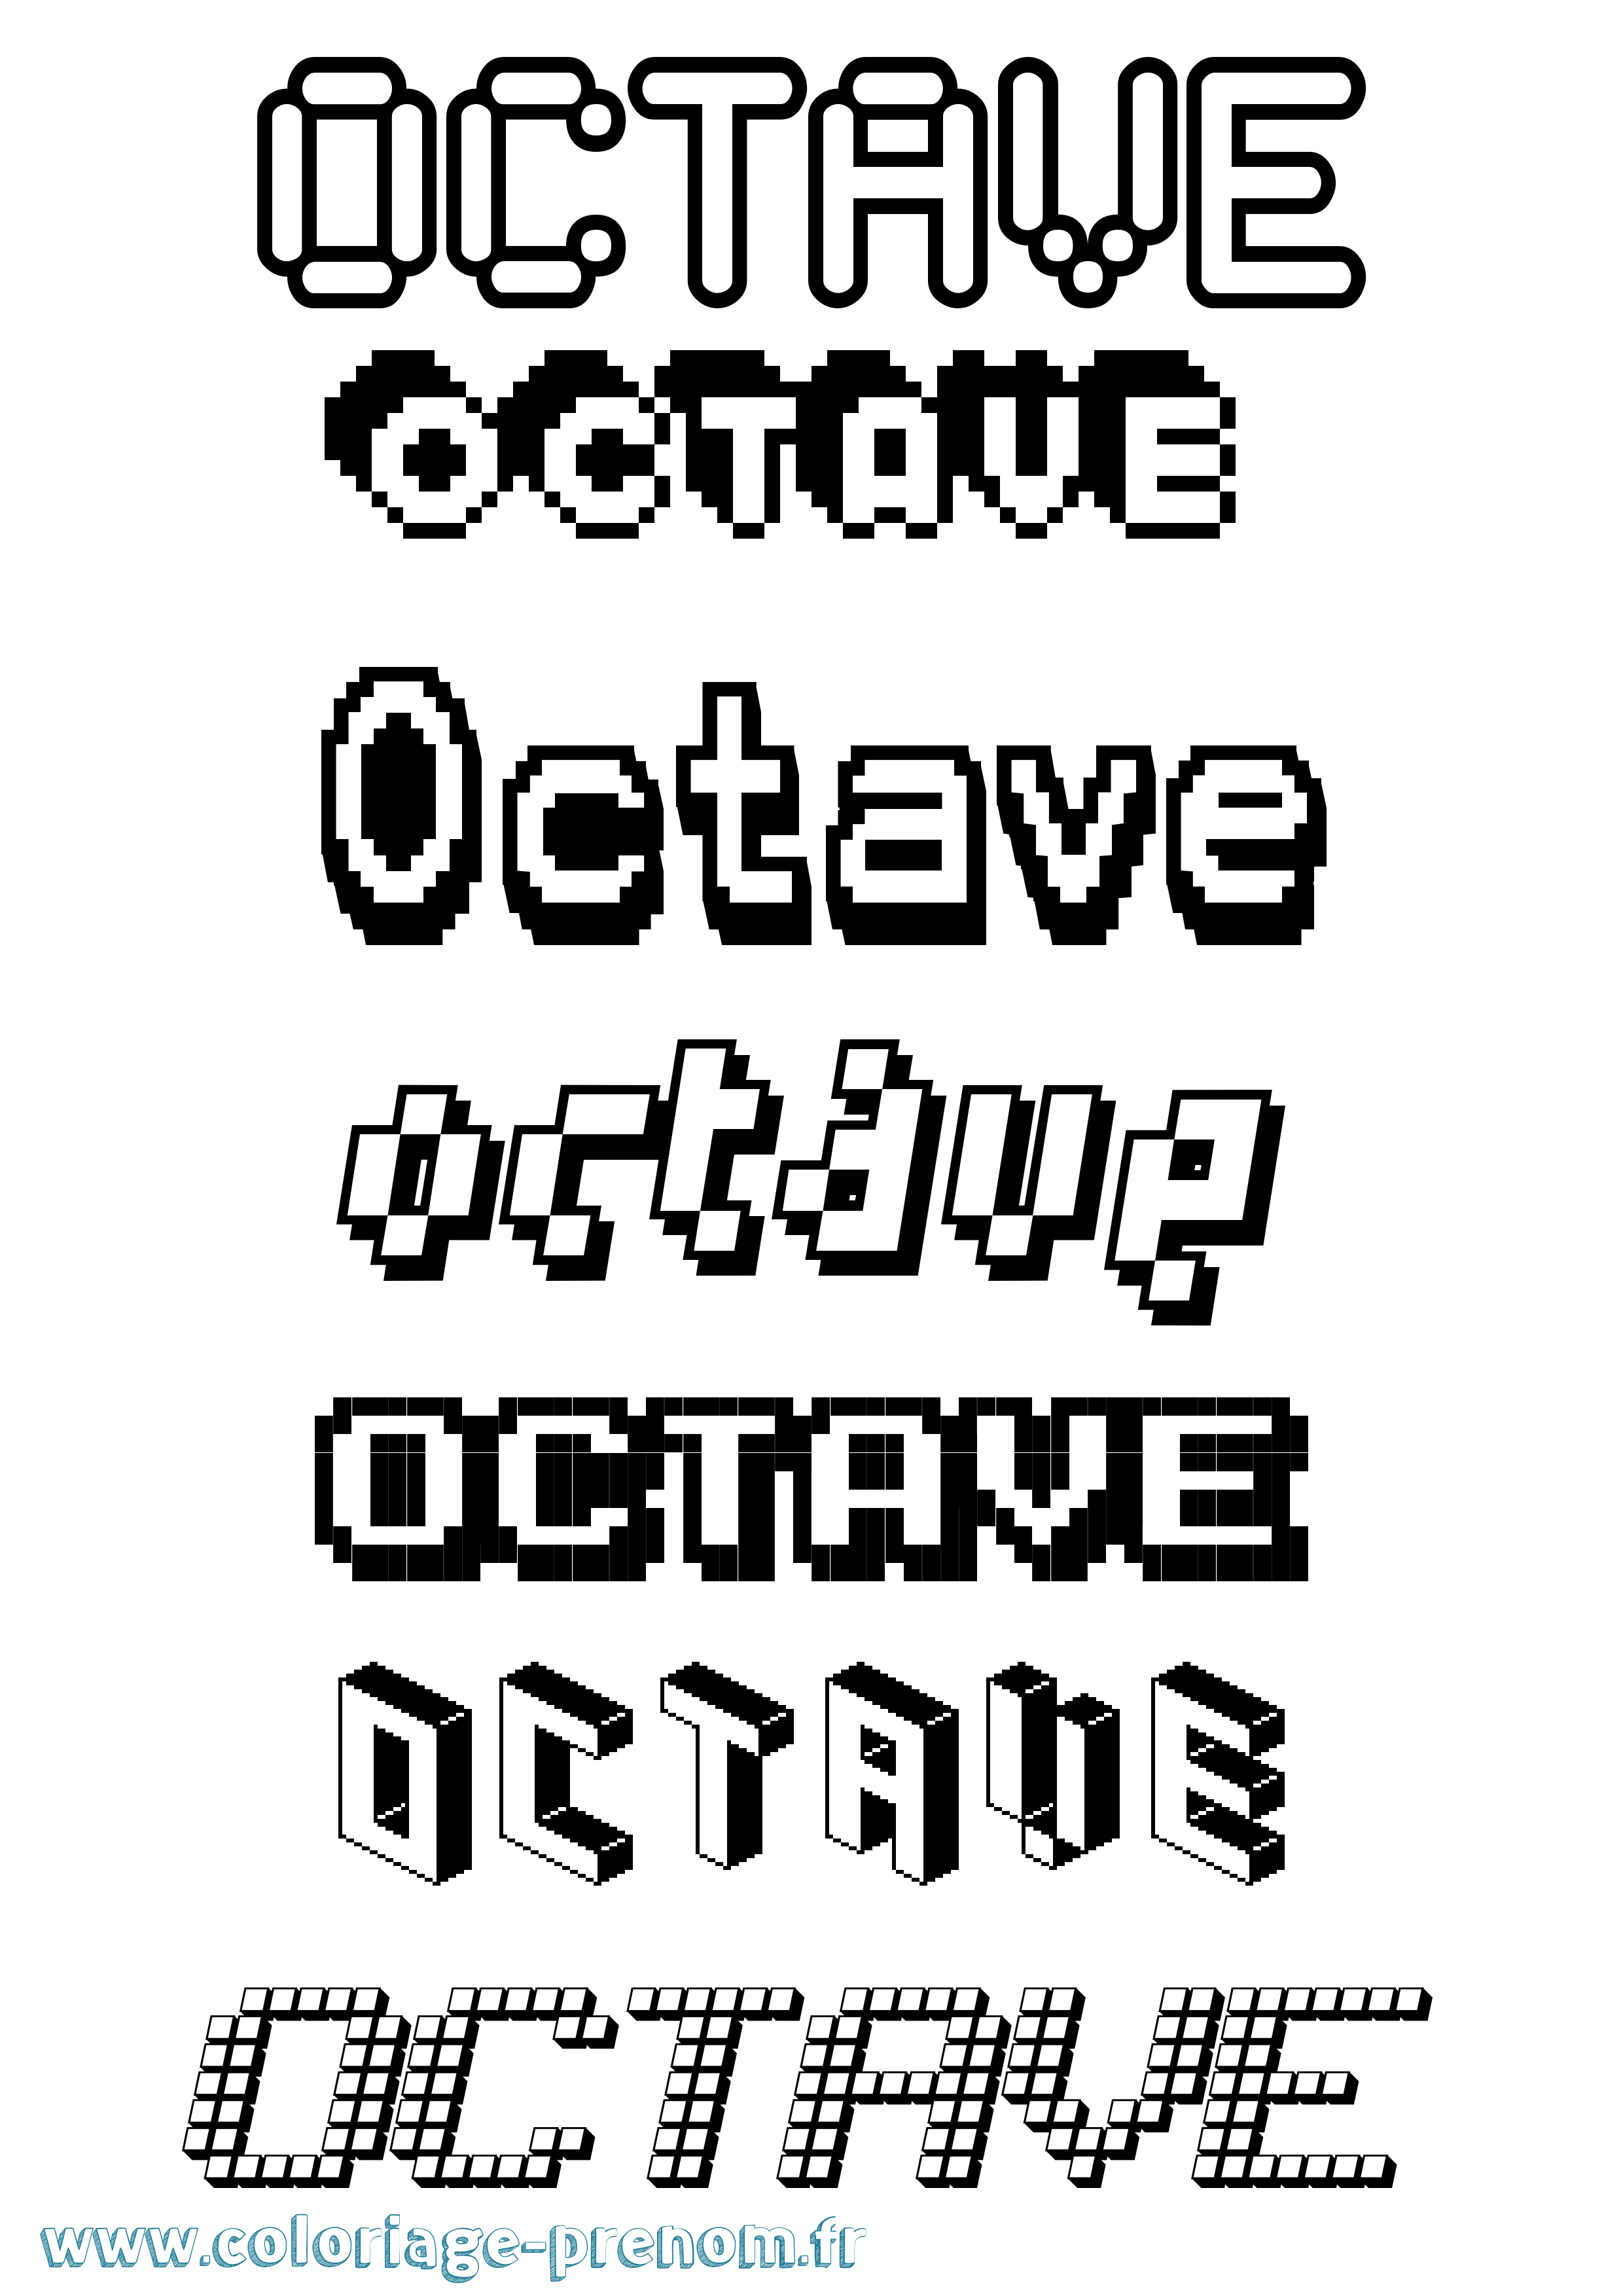 Coloriage prénom Octave Pixel